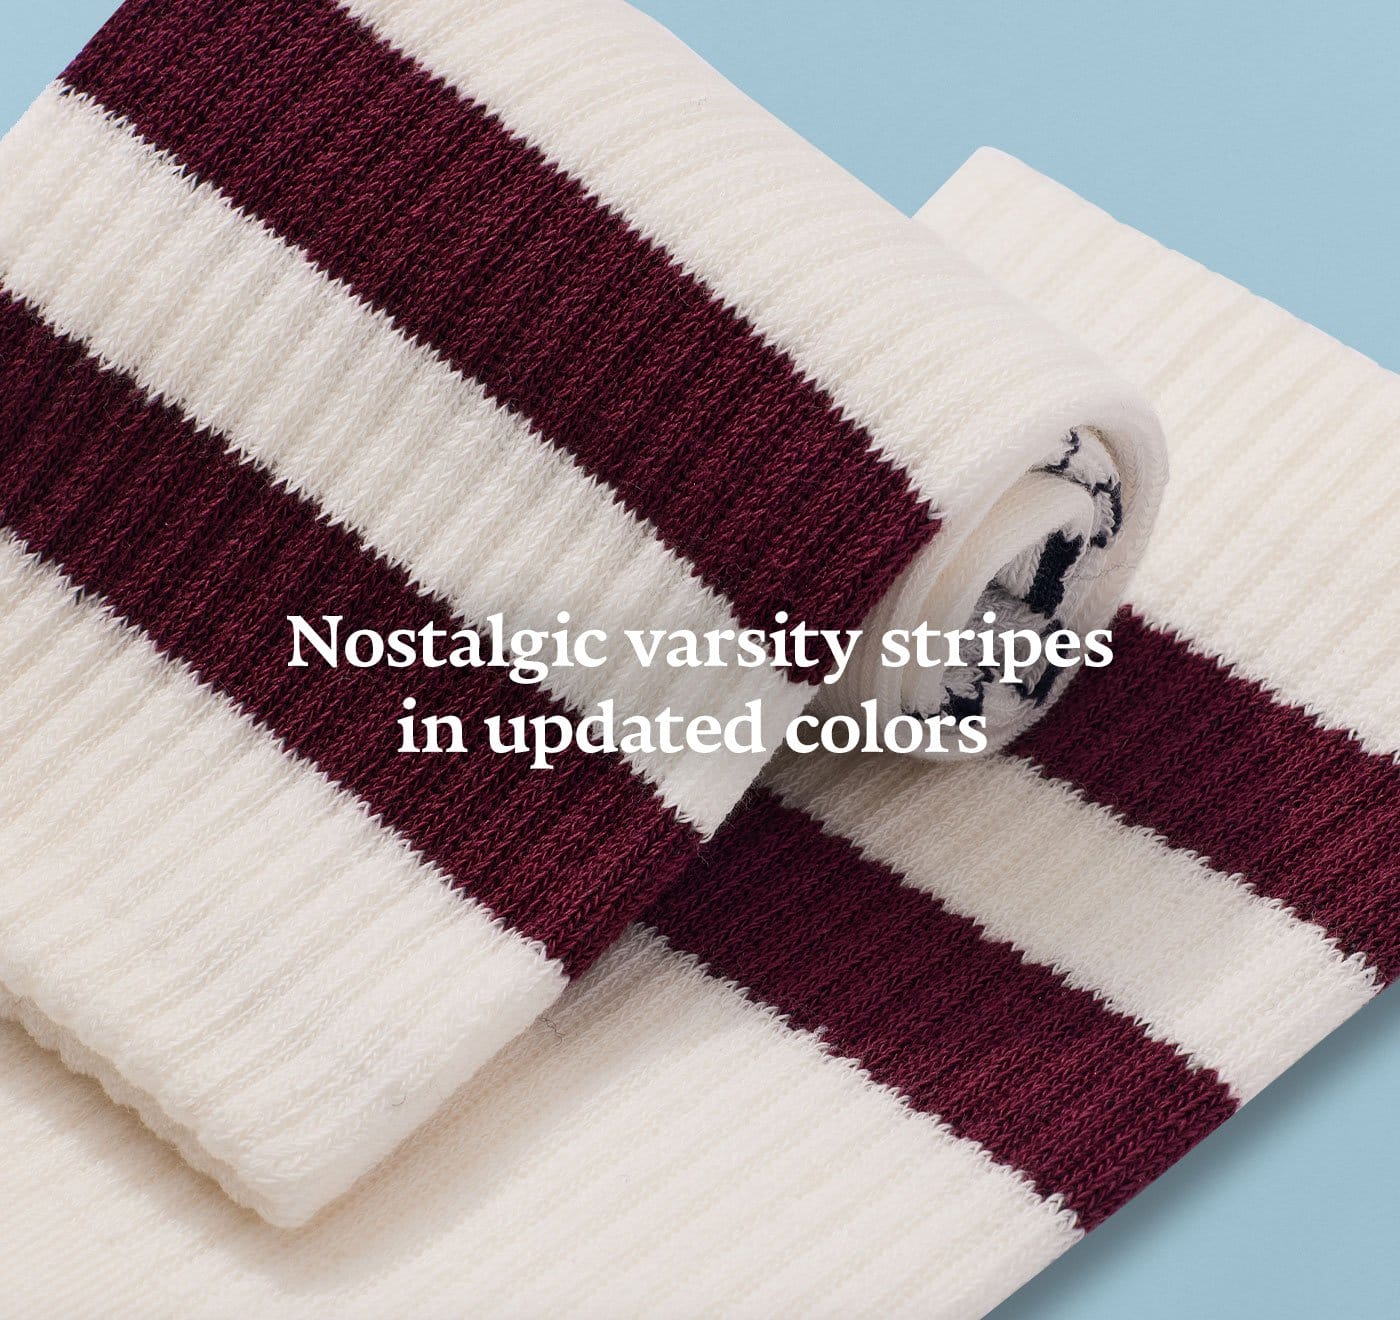 Nostalgic varsity stripes in updated colors